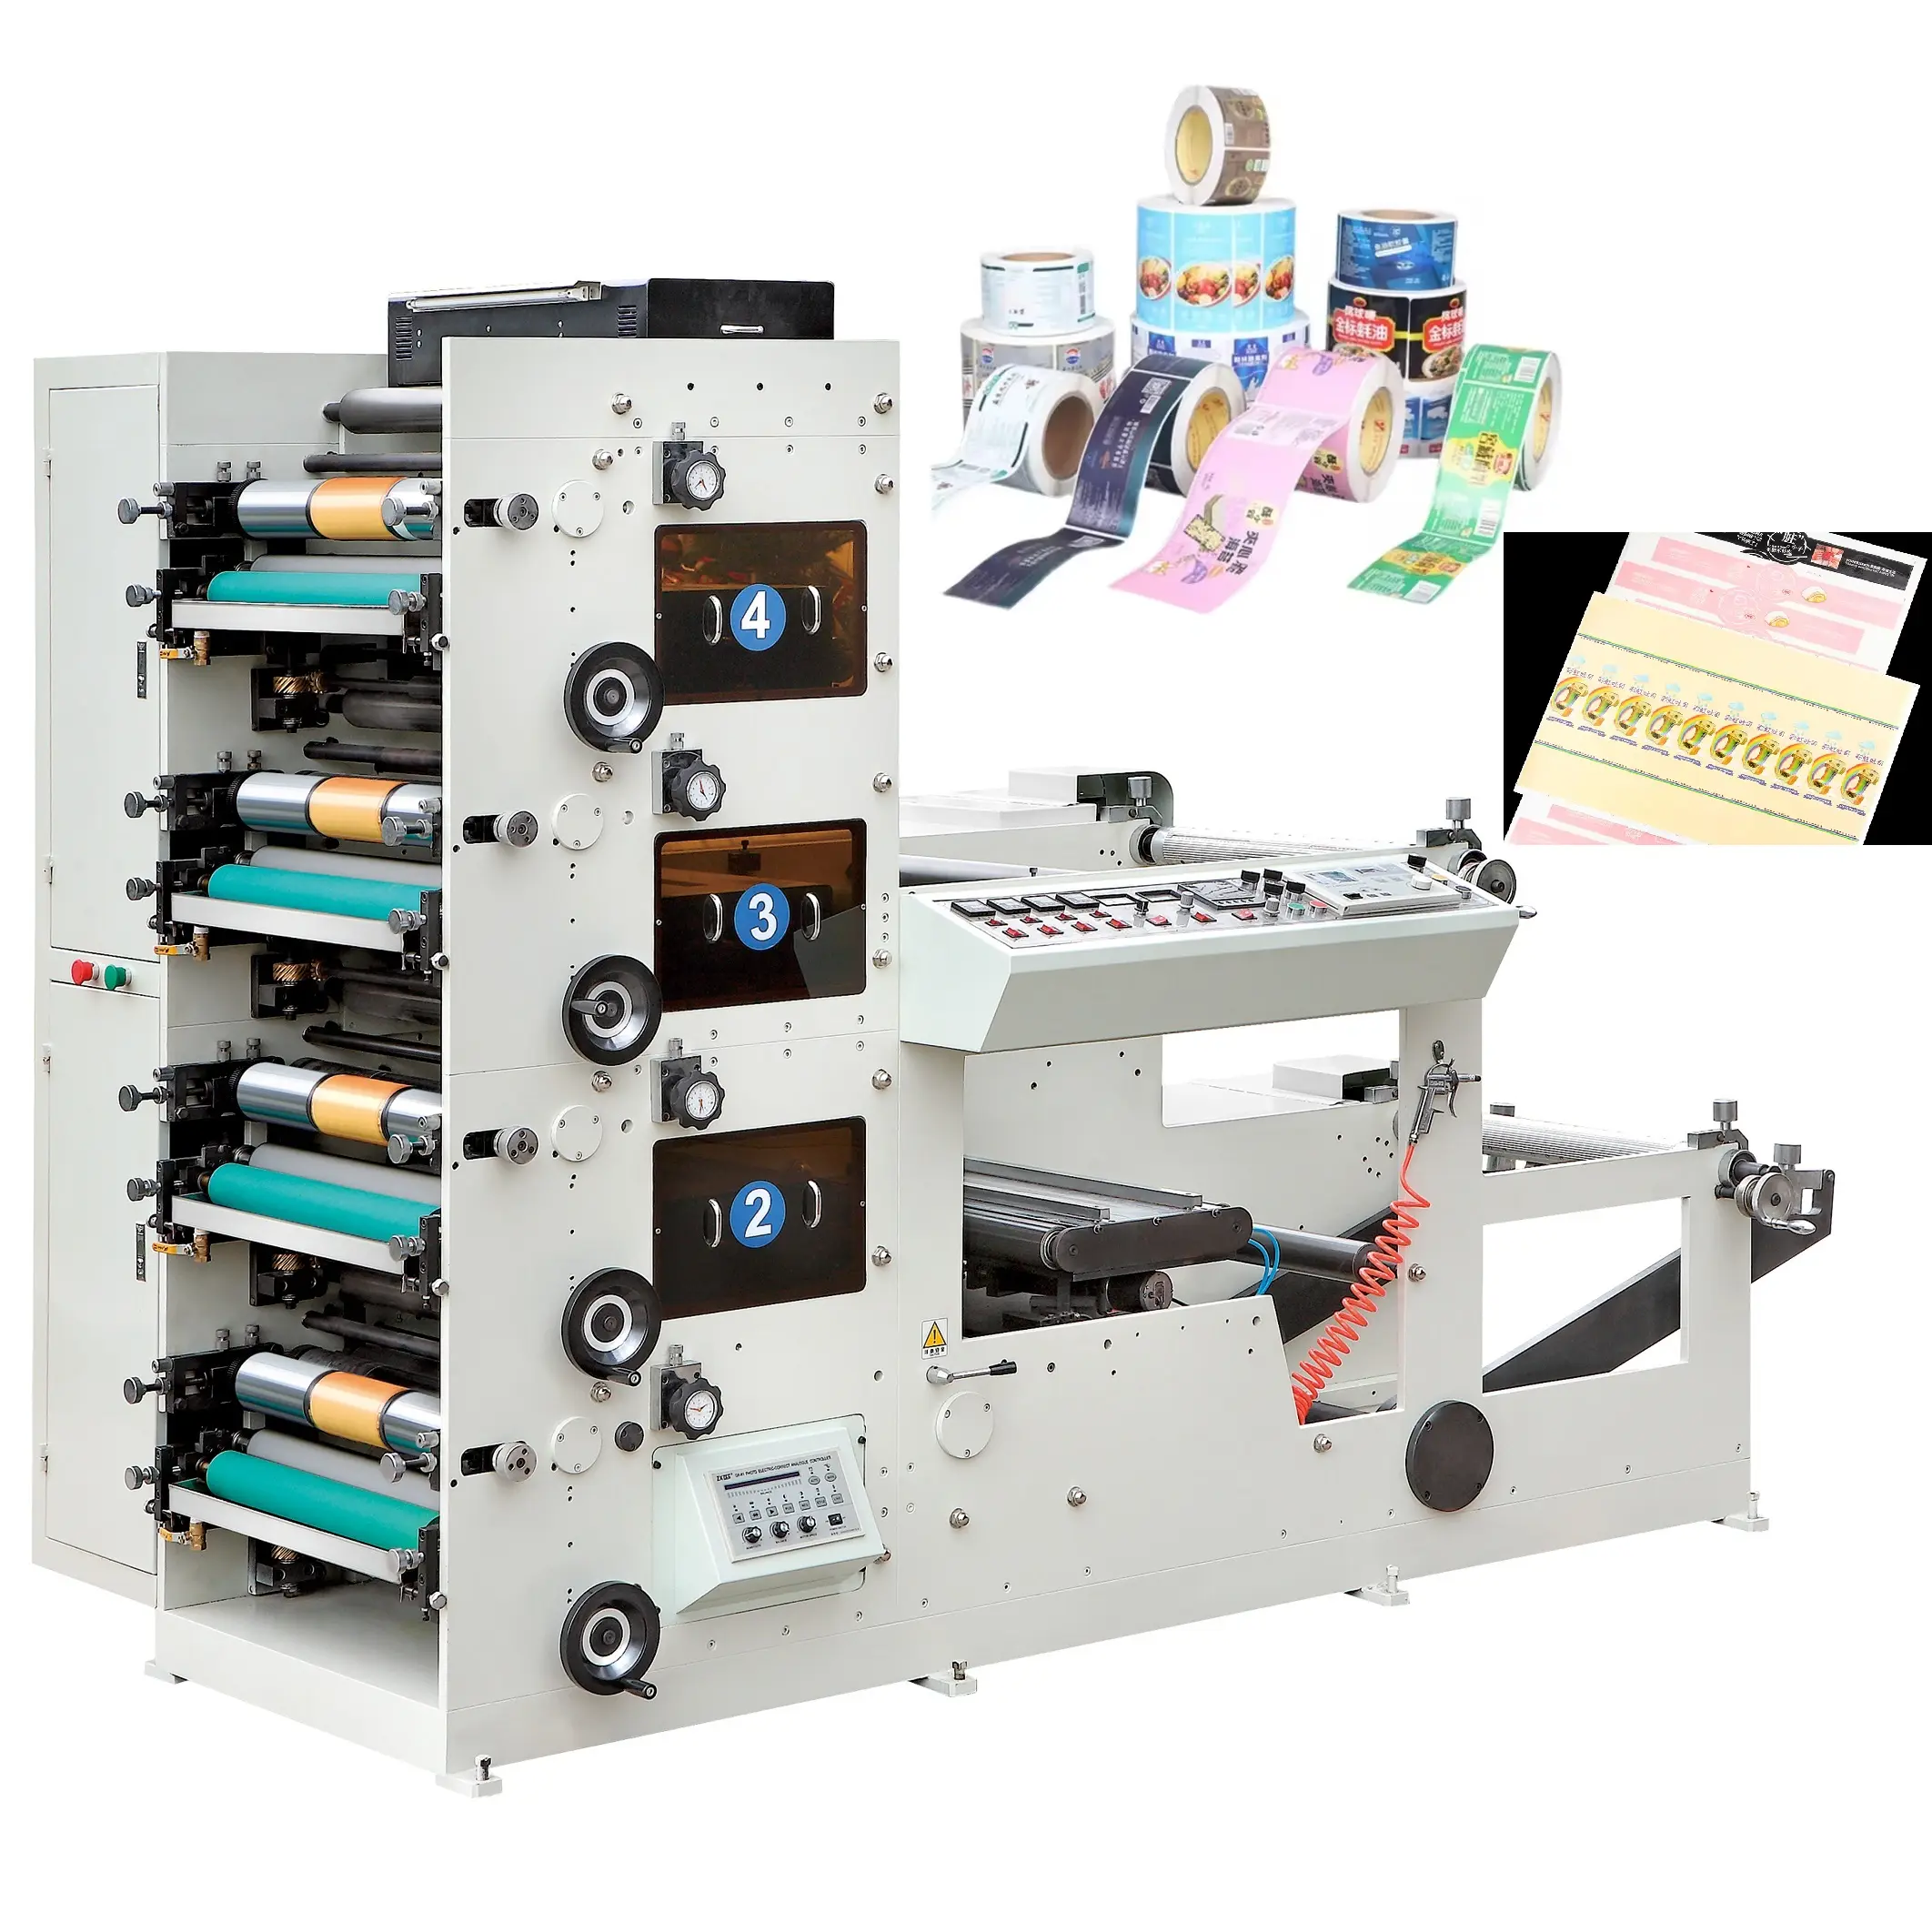 Macchina da stampa flessografica automatica produttori di prodotti alimentari chimici quotidiani etichetta medica Logo macchina da stampa flessografica